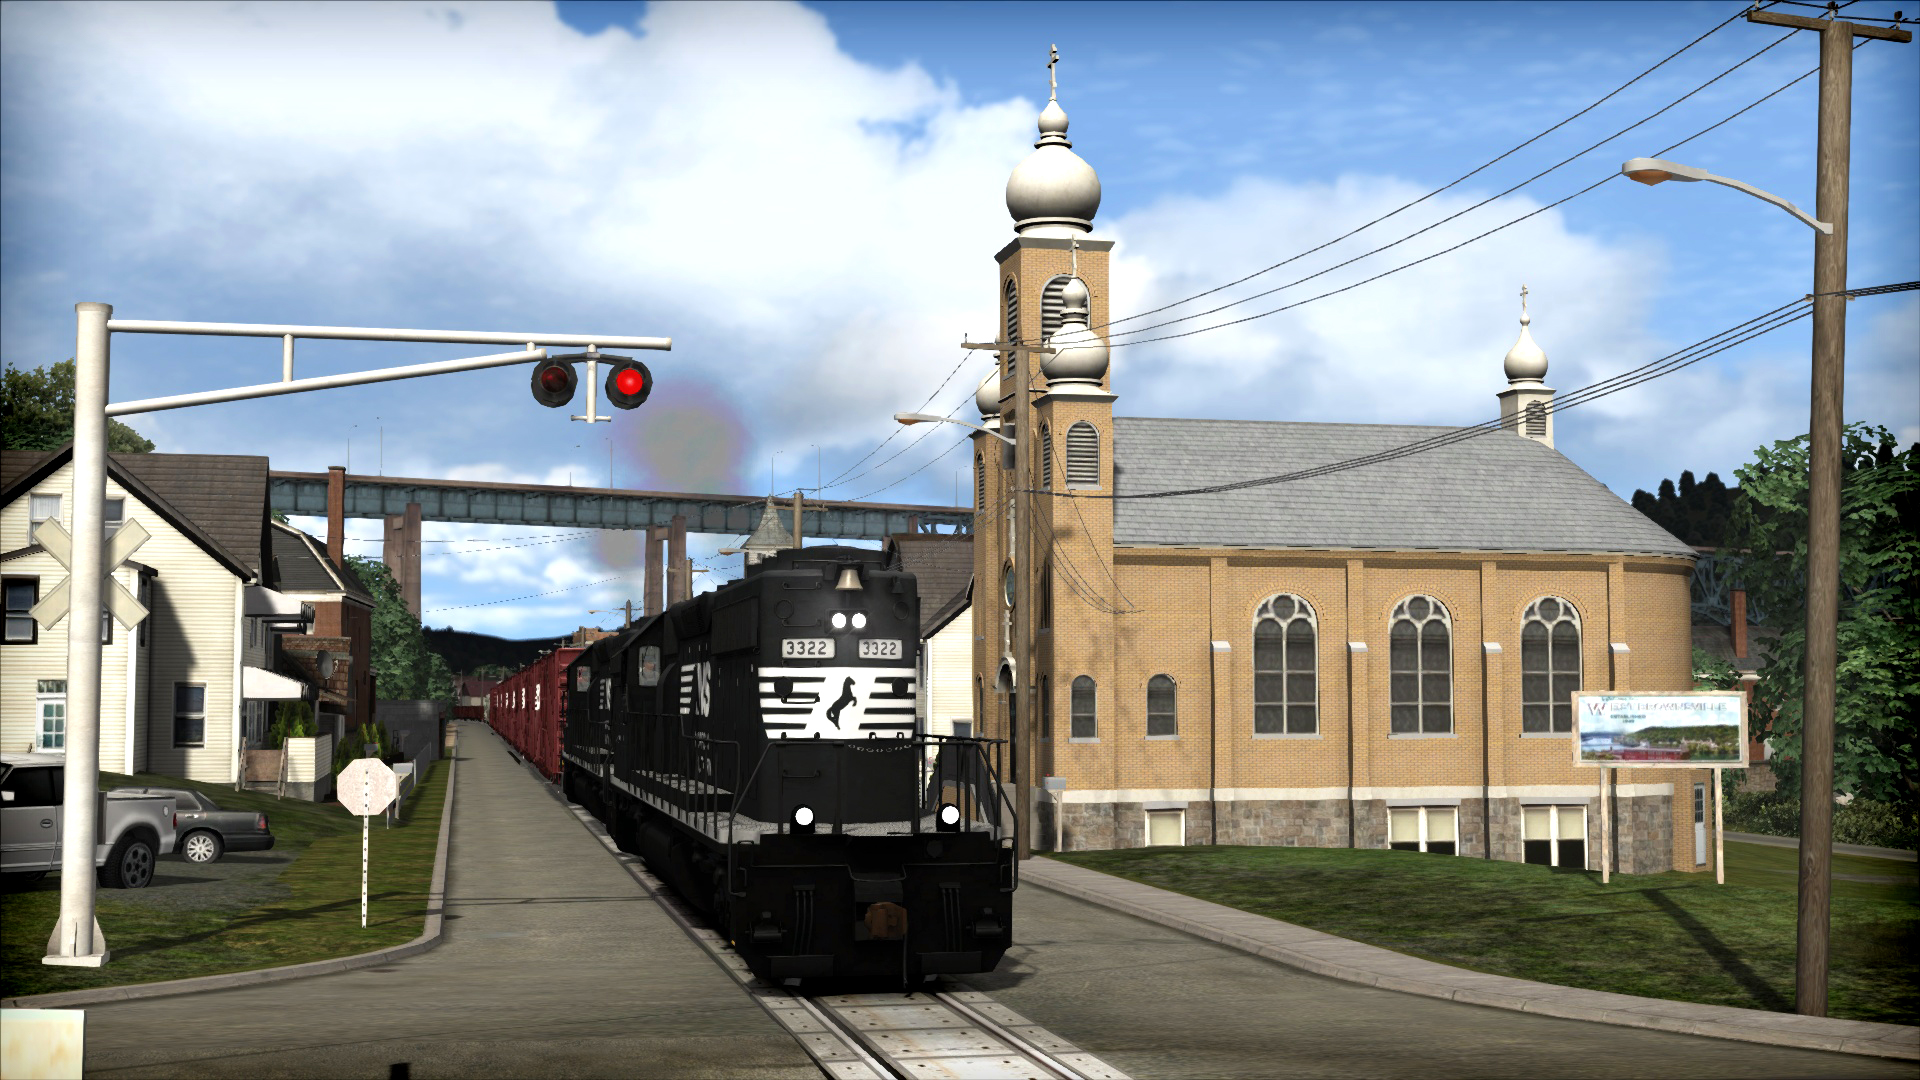 Train Simulator: Norfolk Southern SD40-2 High Nose Long Hood Forward Loco Add-On screenshot